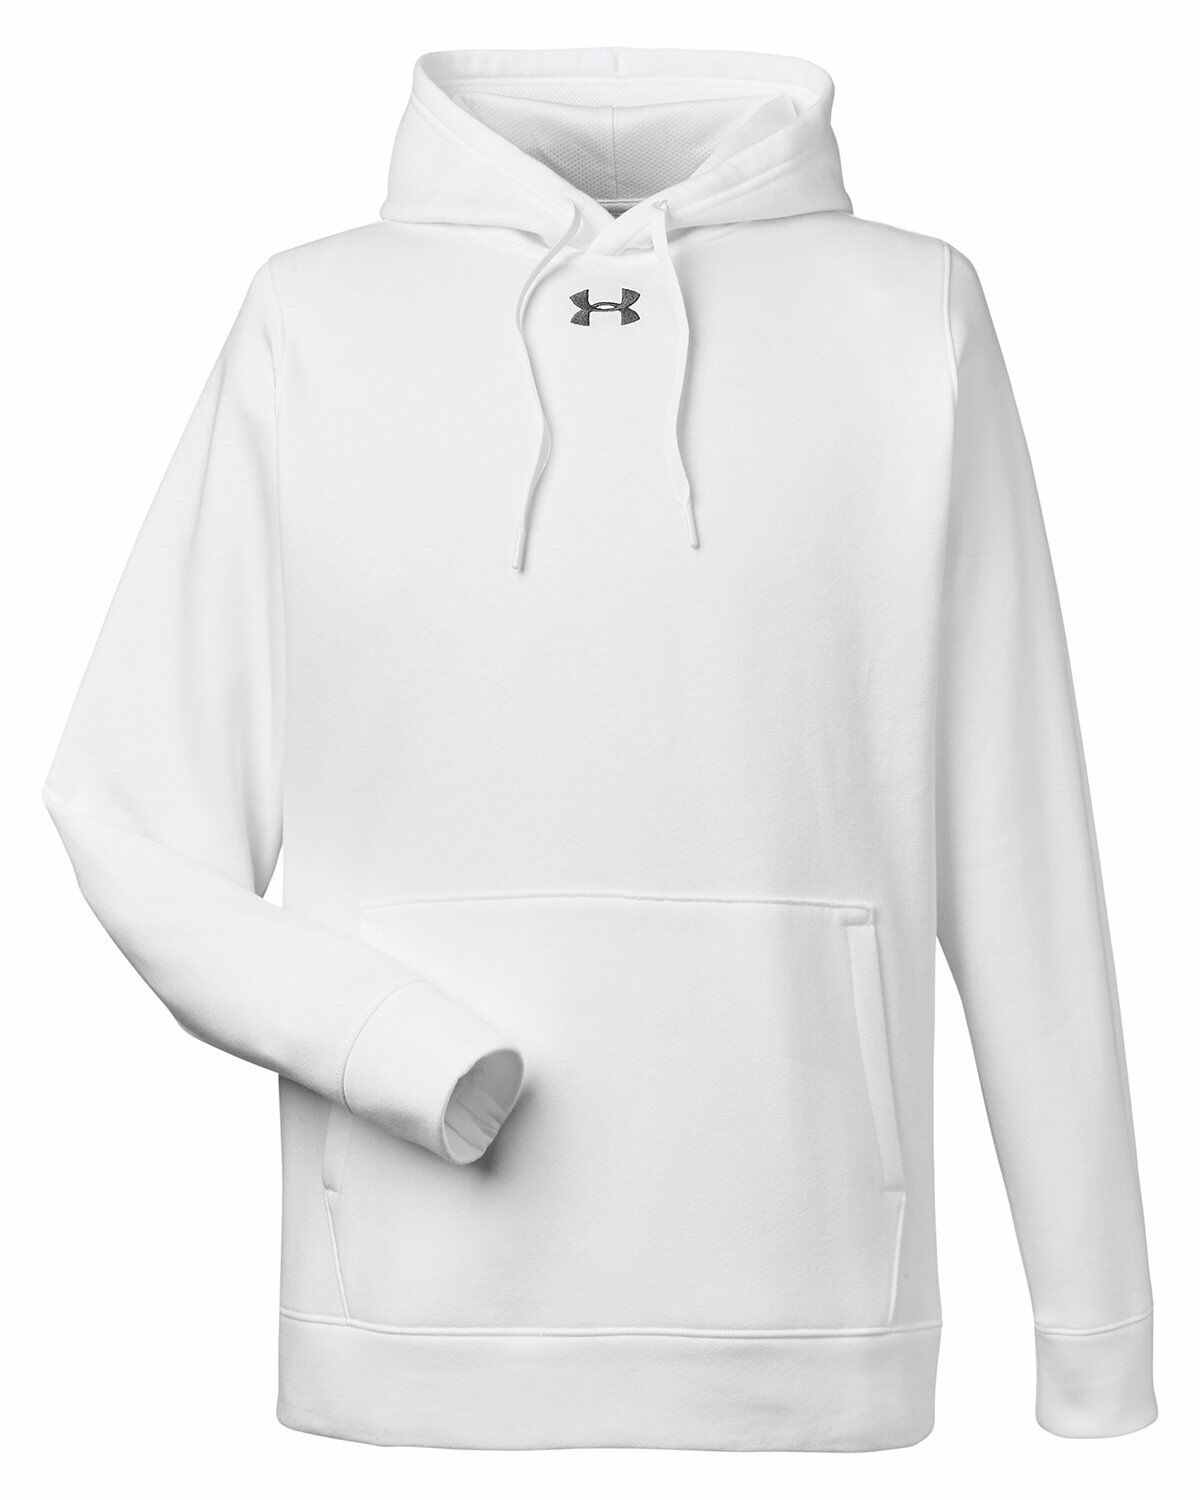 Branded Under Armour Men’s Hustle Pullover Hooded Sweatshirt White/Graphite